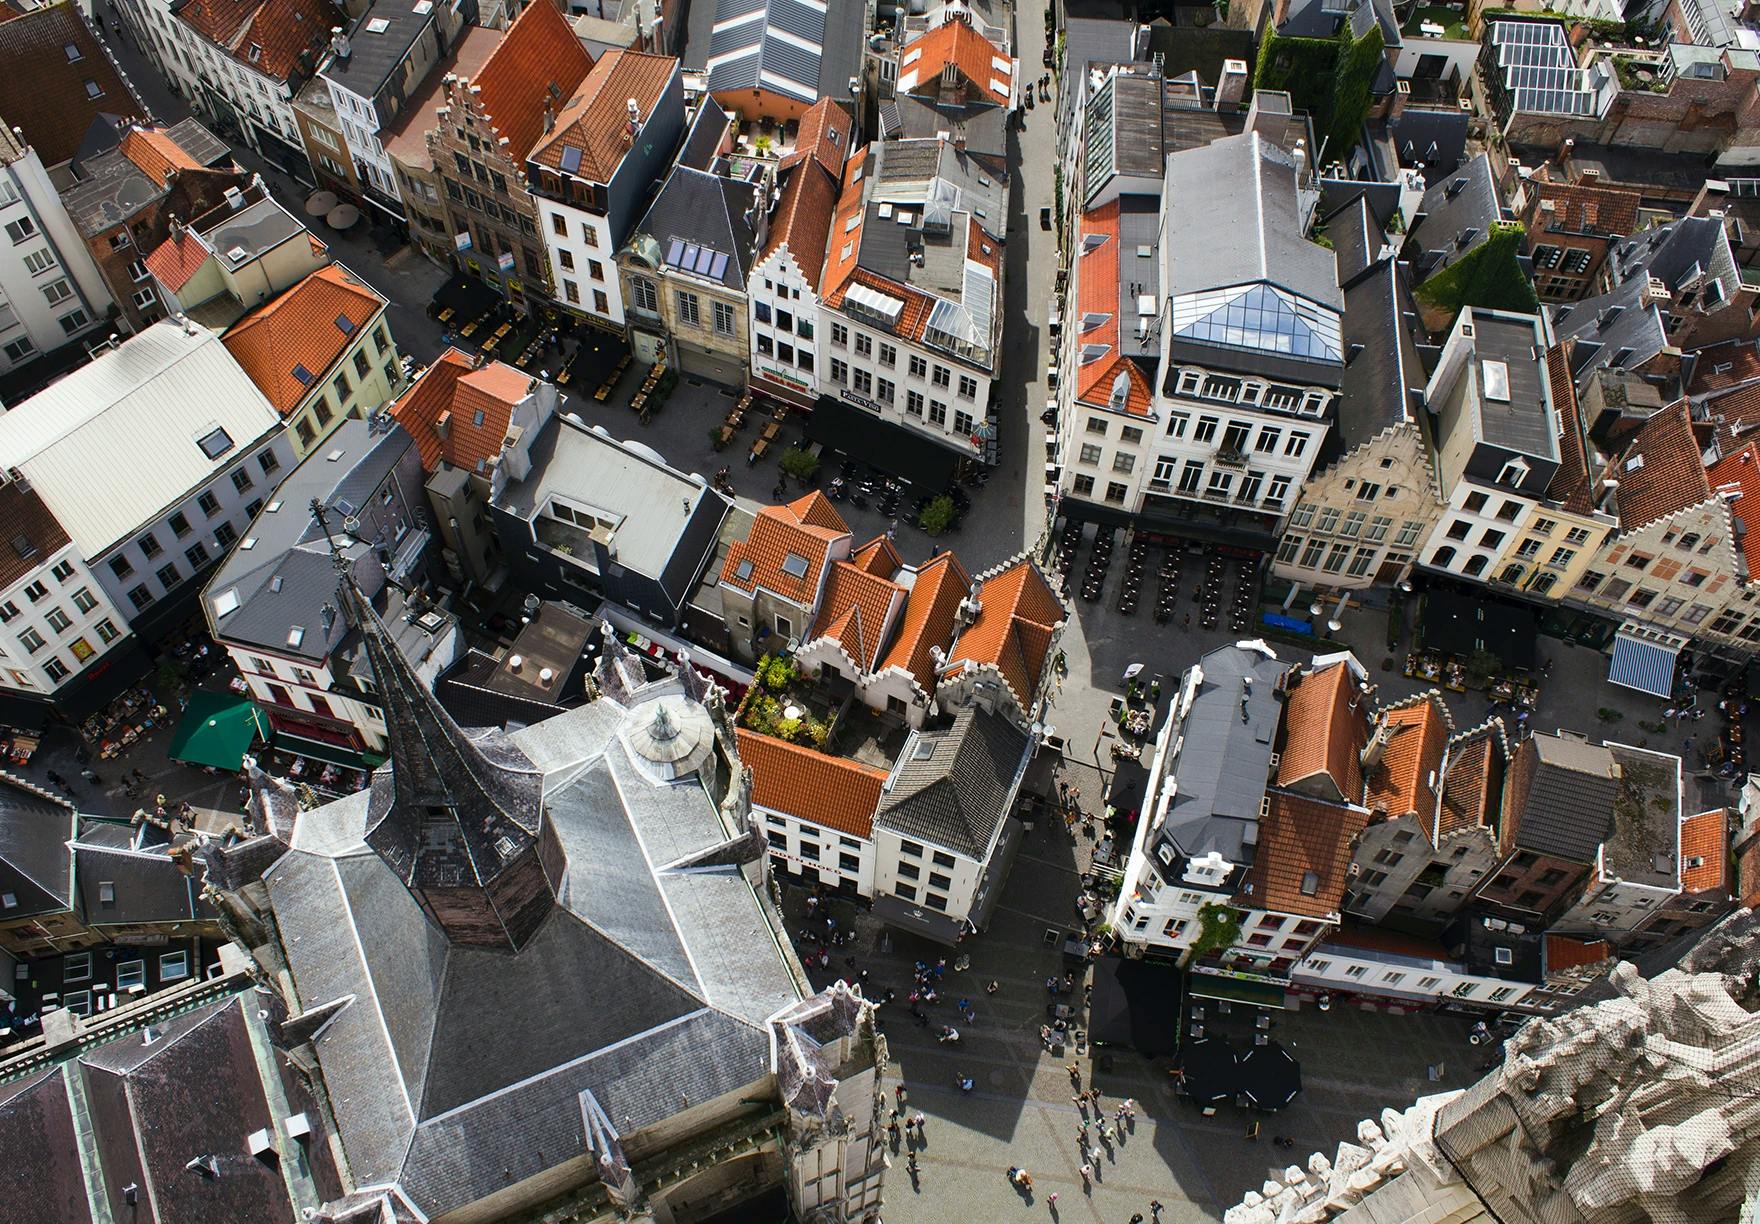 An aerial shot of Belgium streets